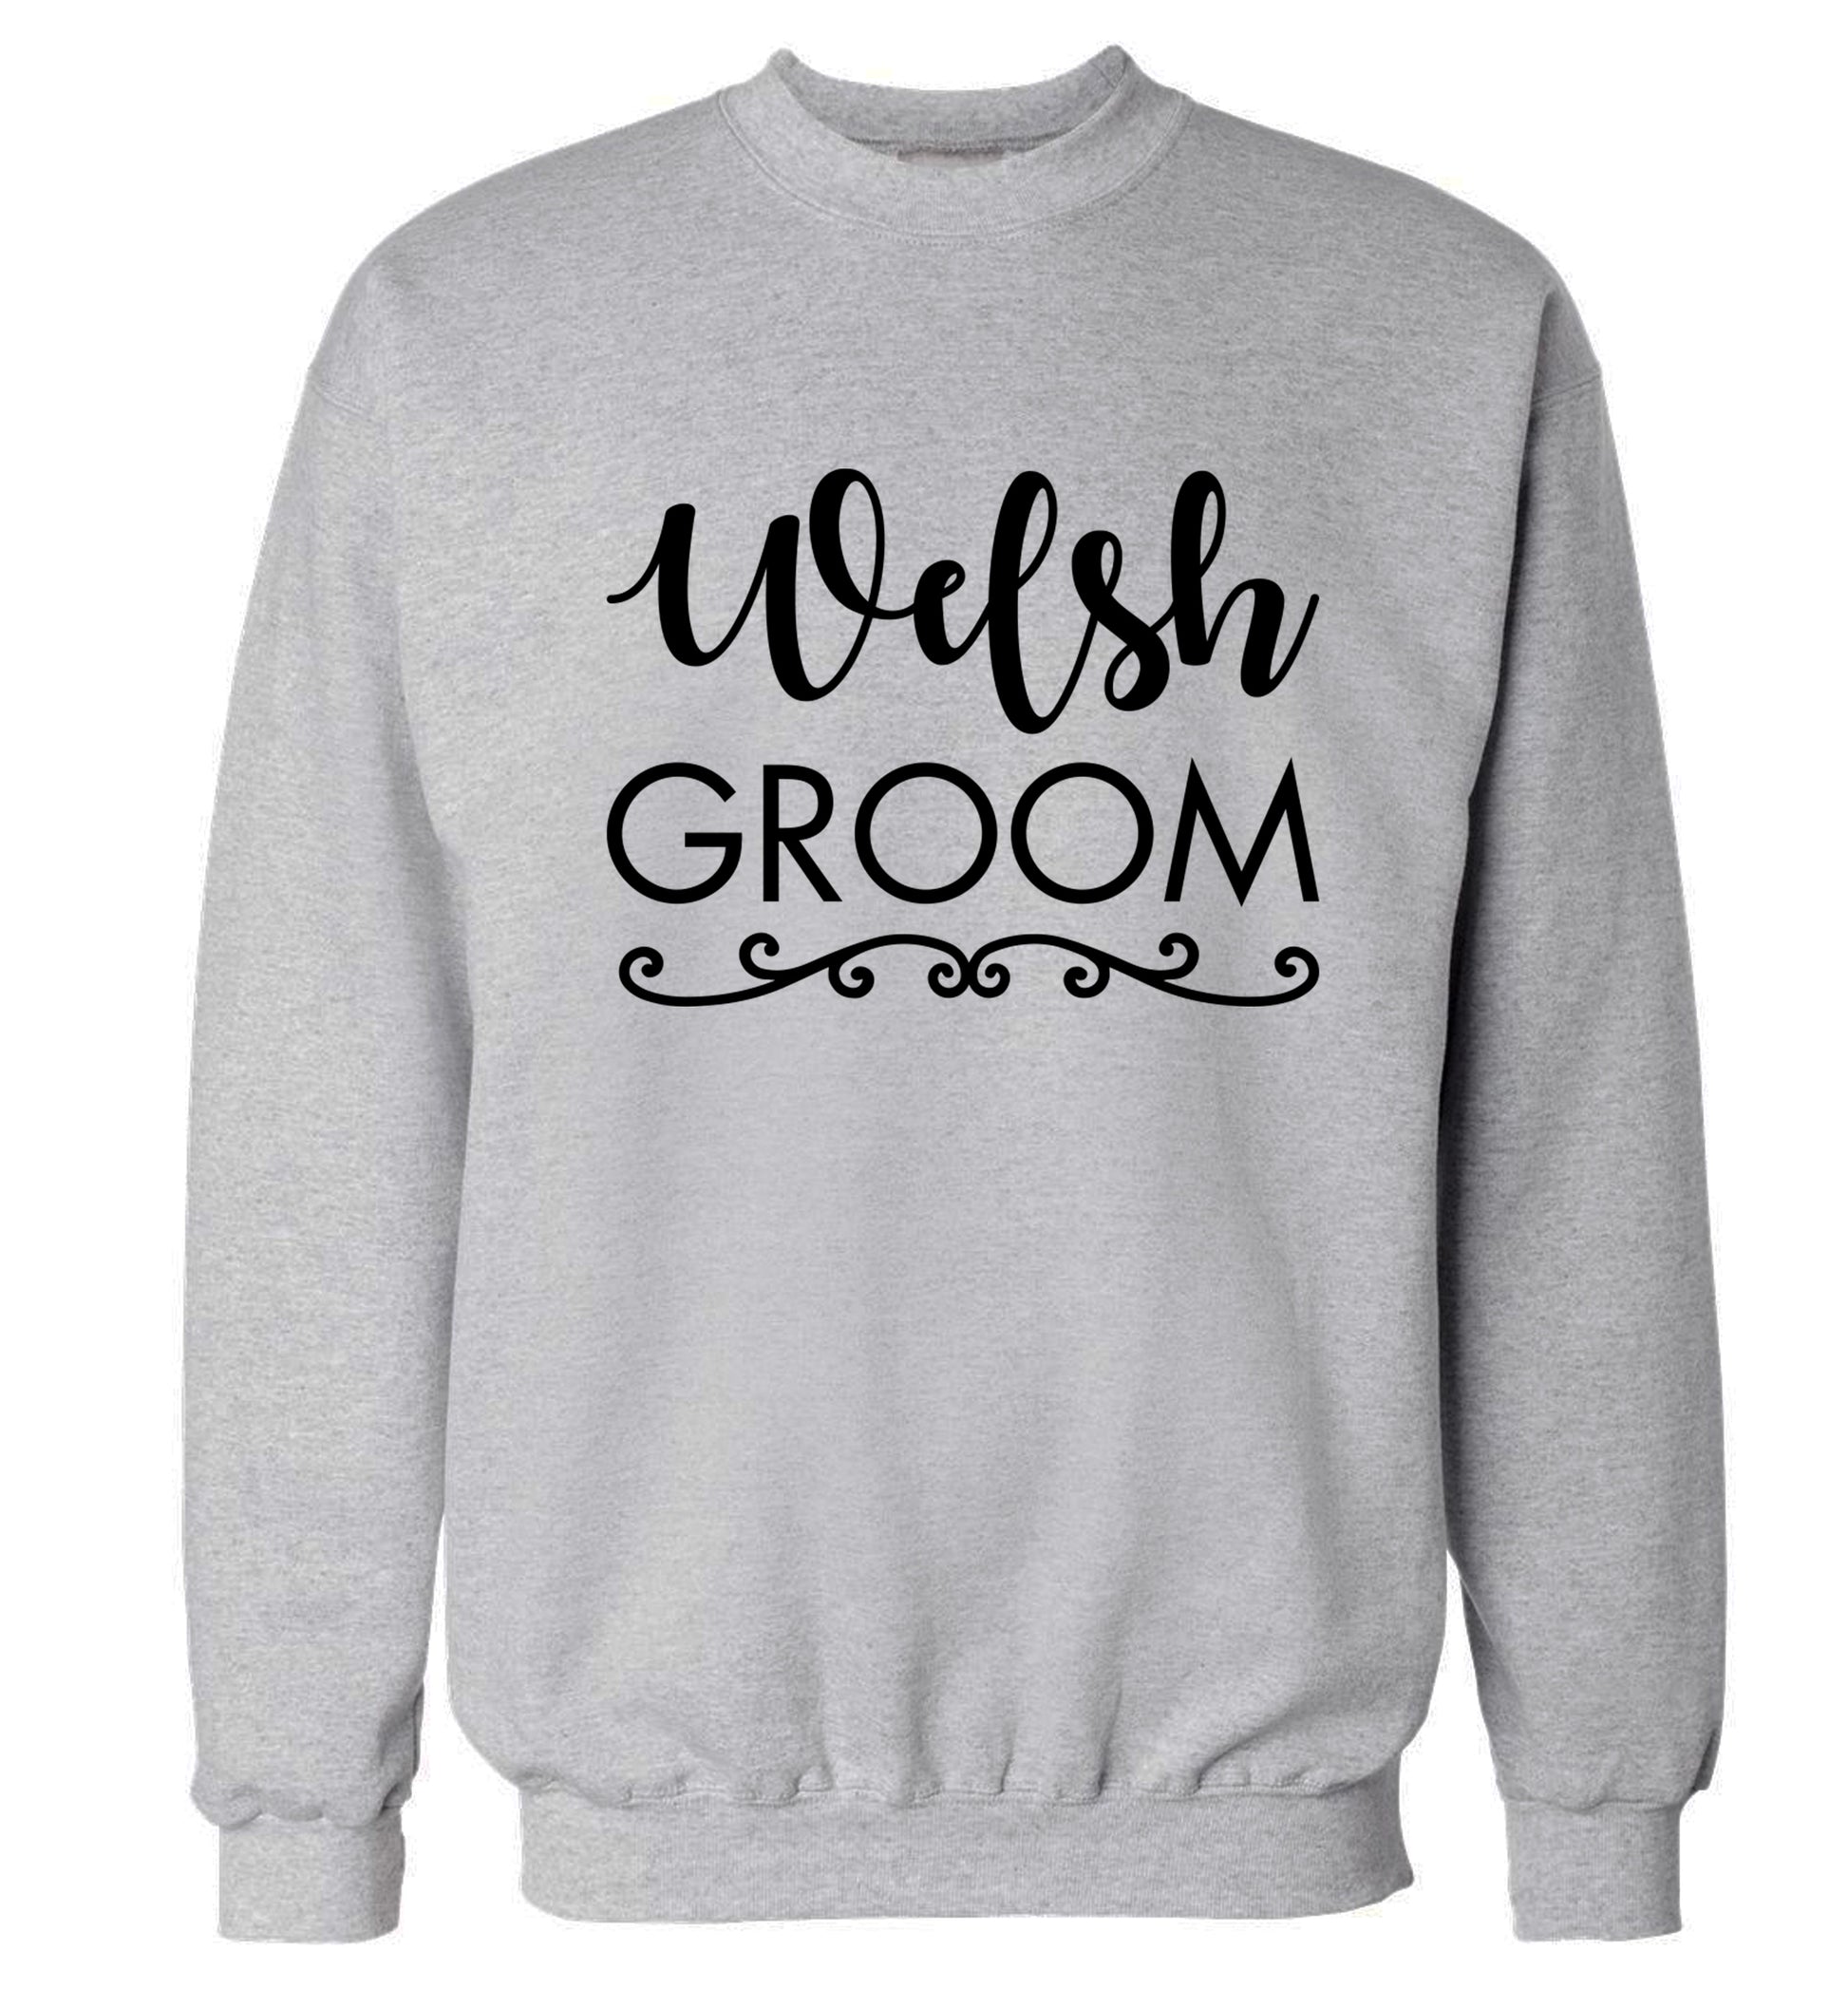 Welsh groom Adult's unisex grey Sweater 2XL